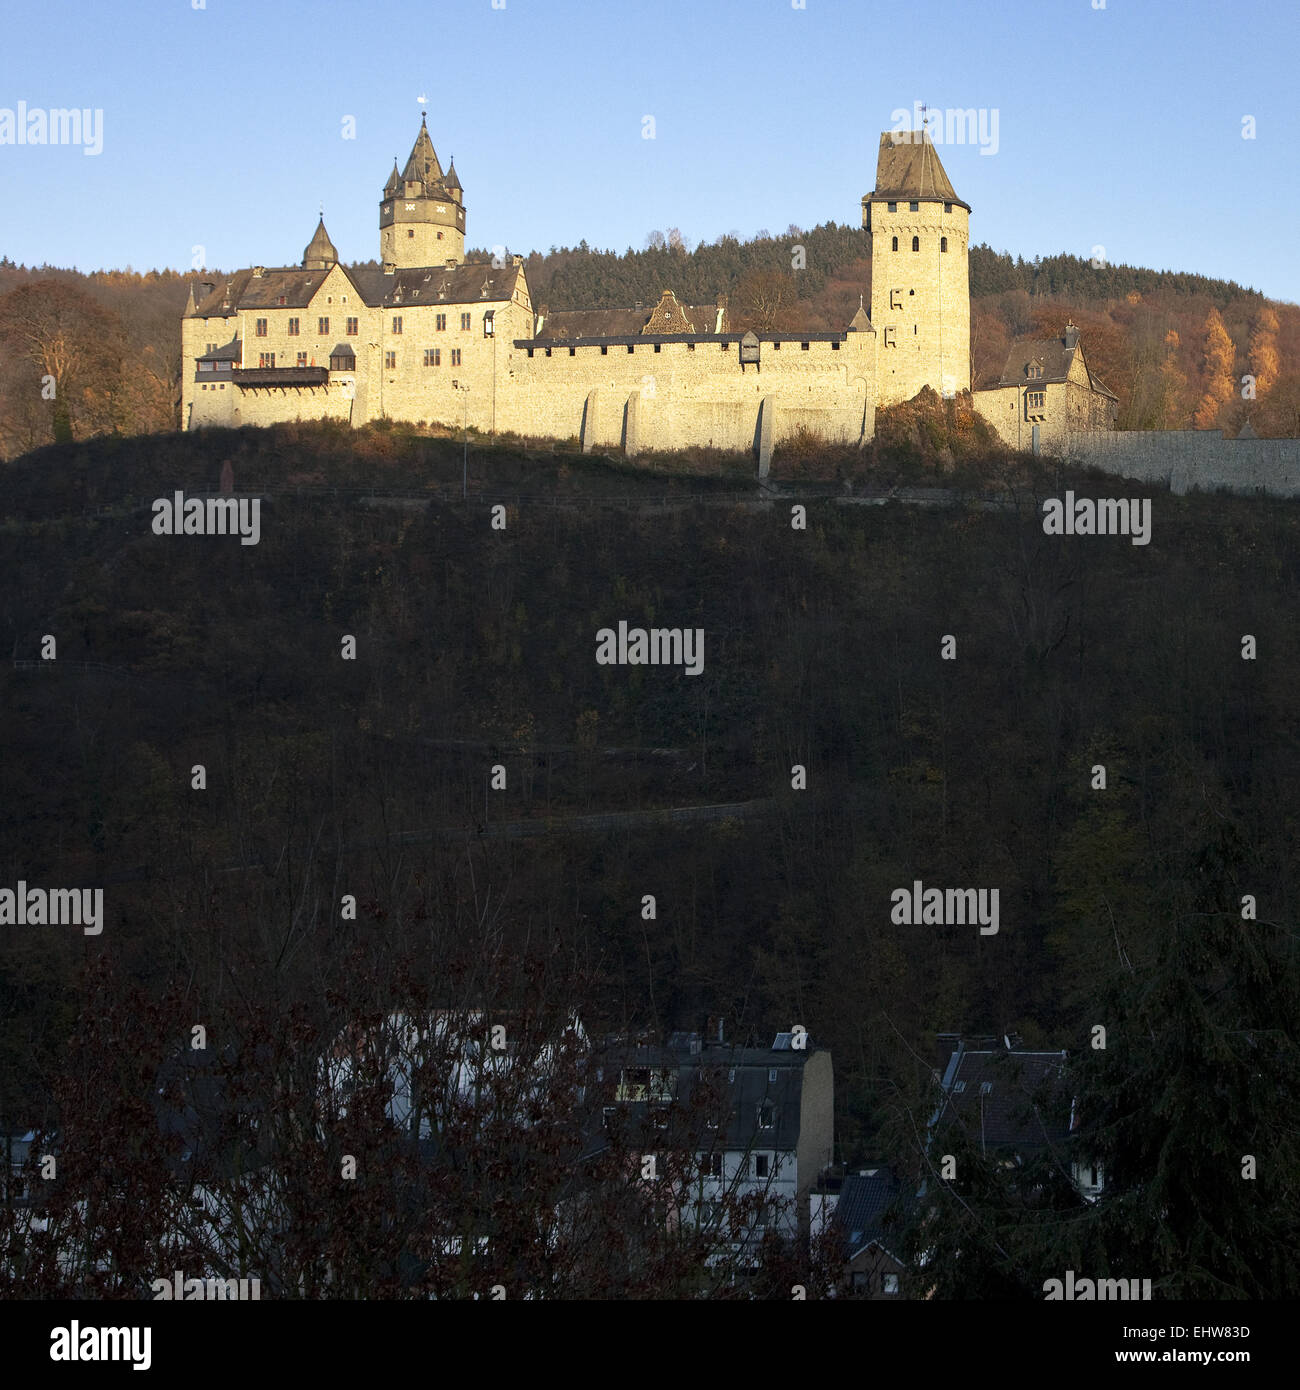 The Altena Castle in Germany Stock Photo